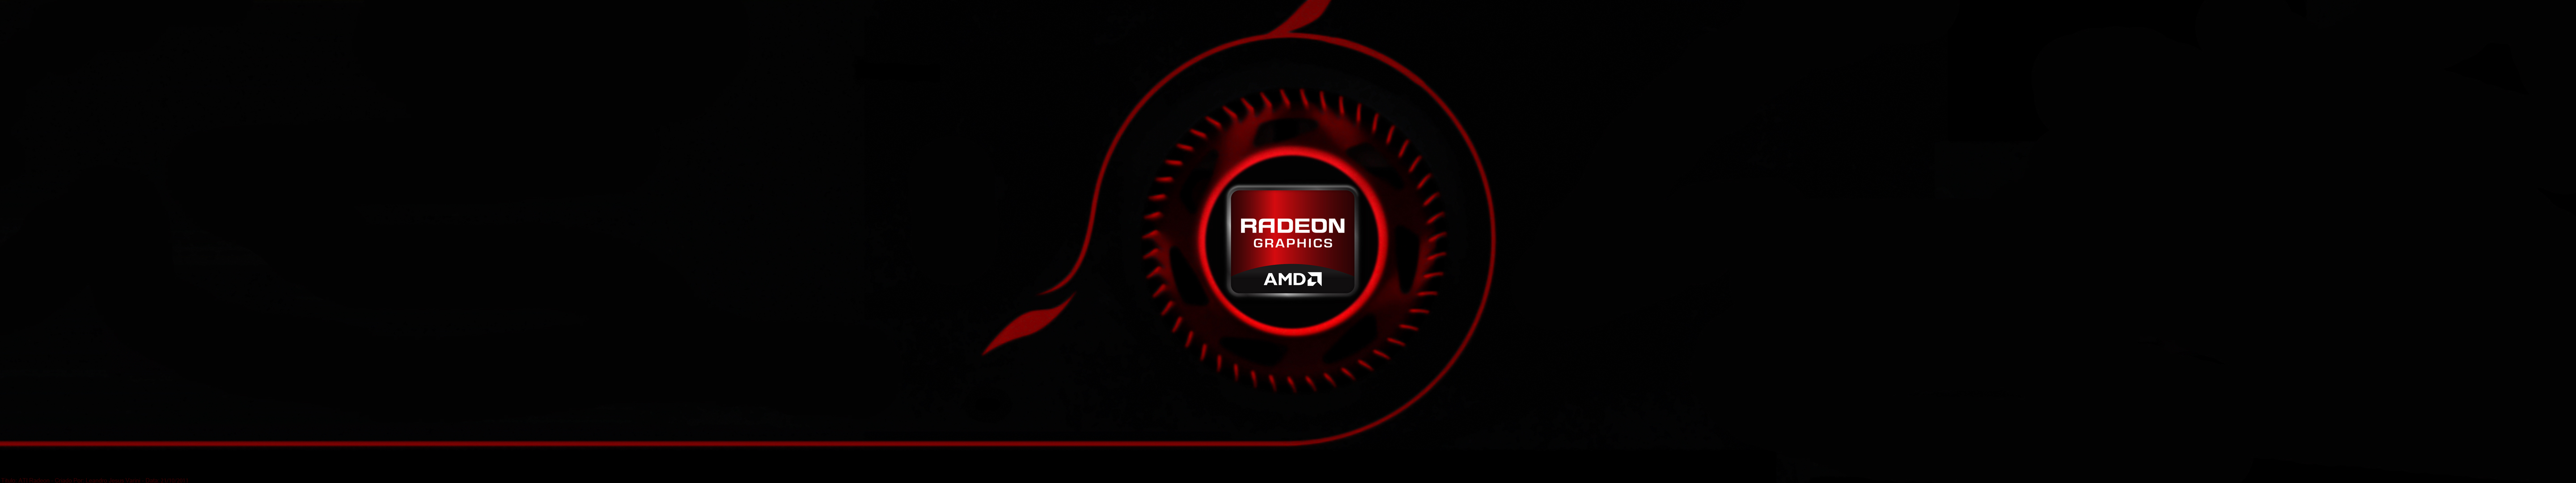 Technology AMD 5760x1080